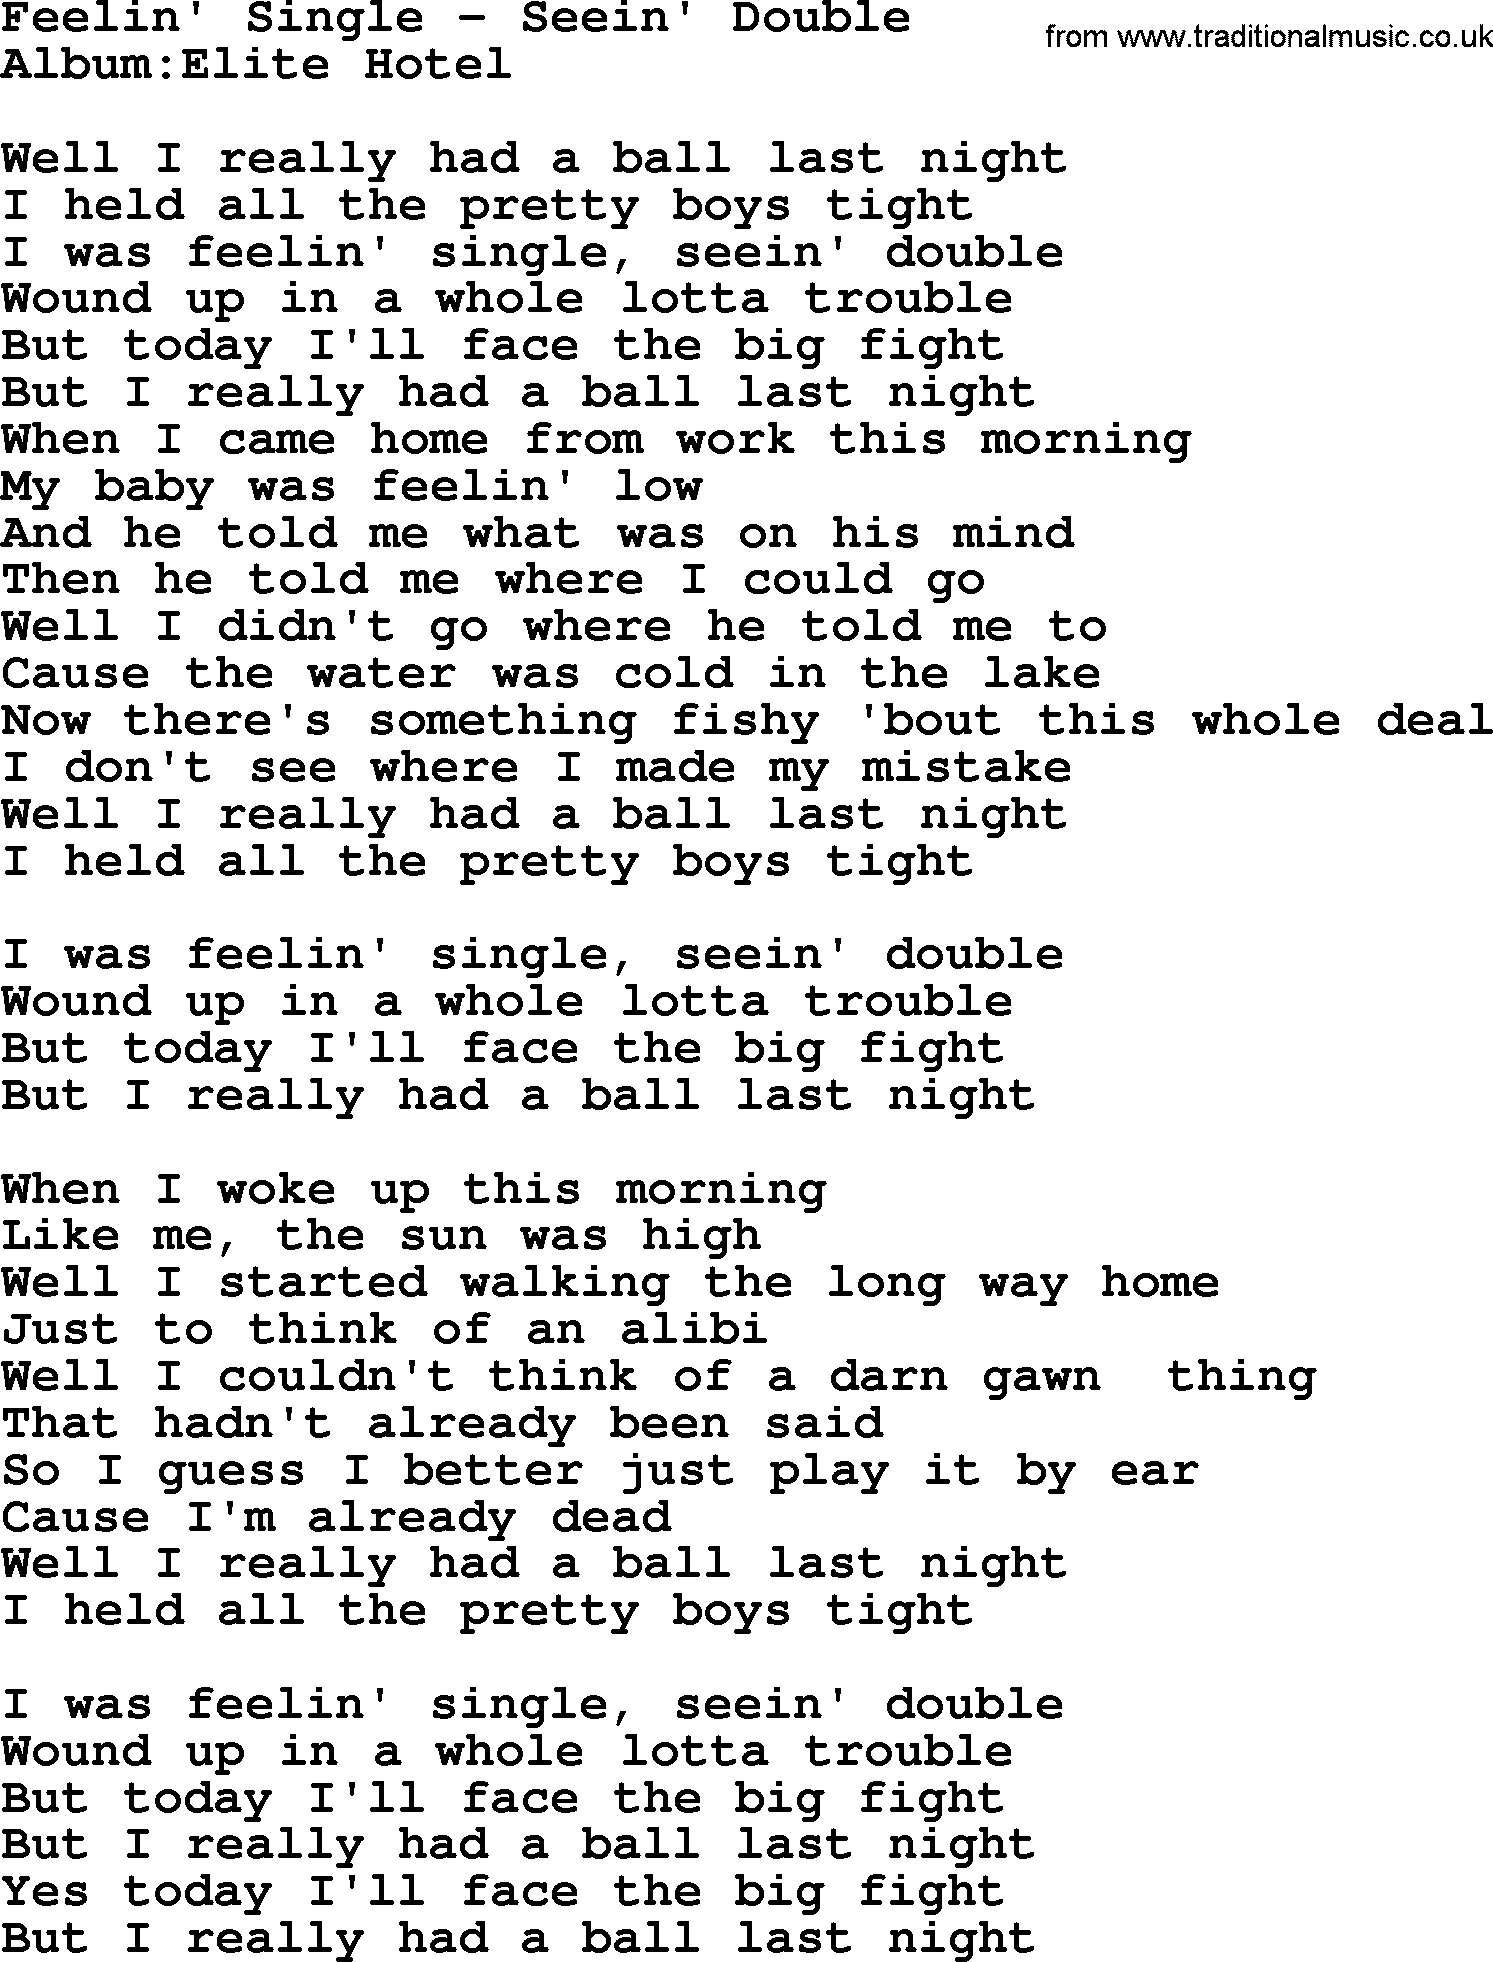 Emmylou Harris song: Feelin' Single - Seein' Double lyrics